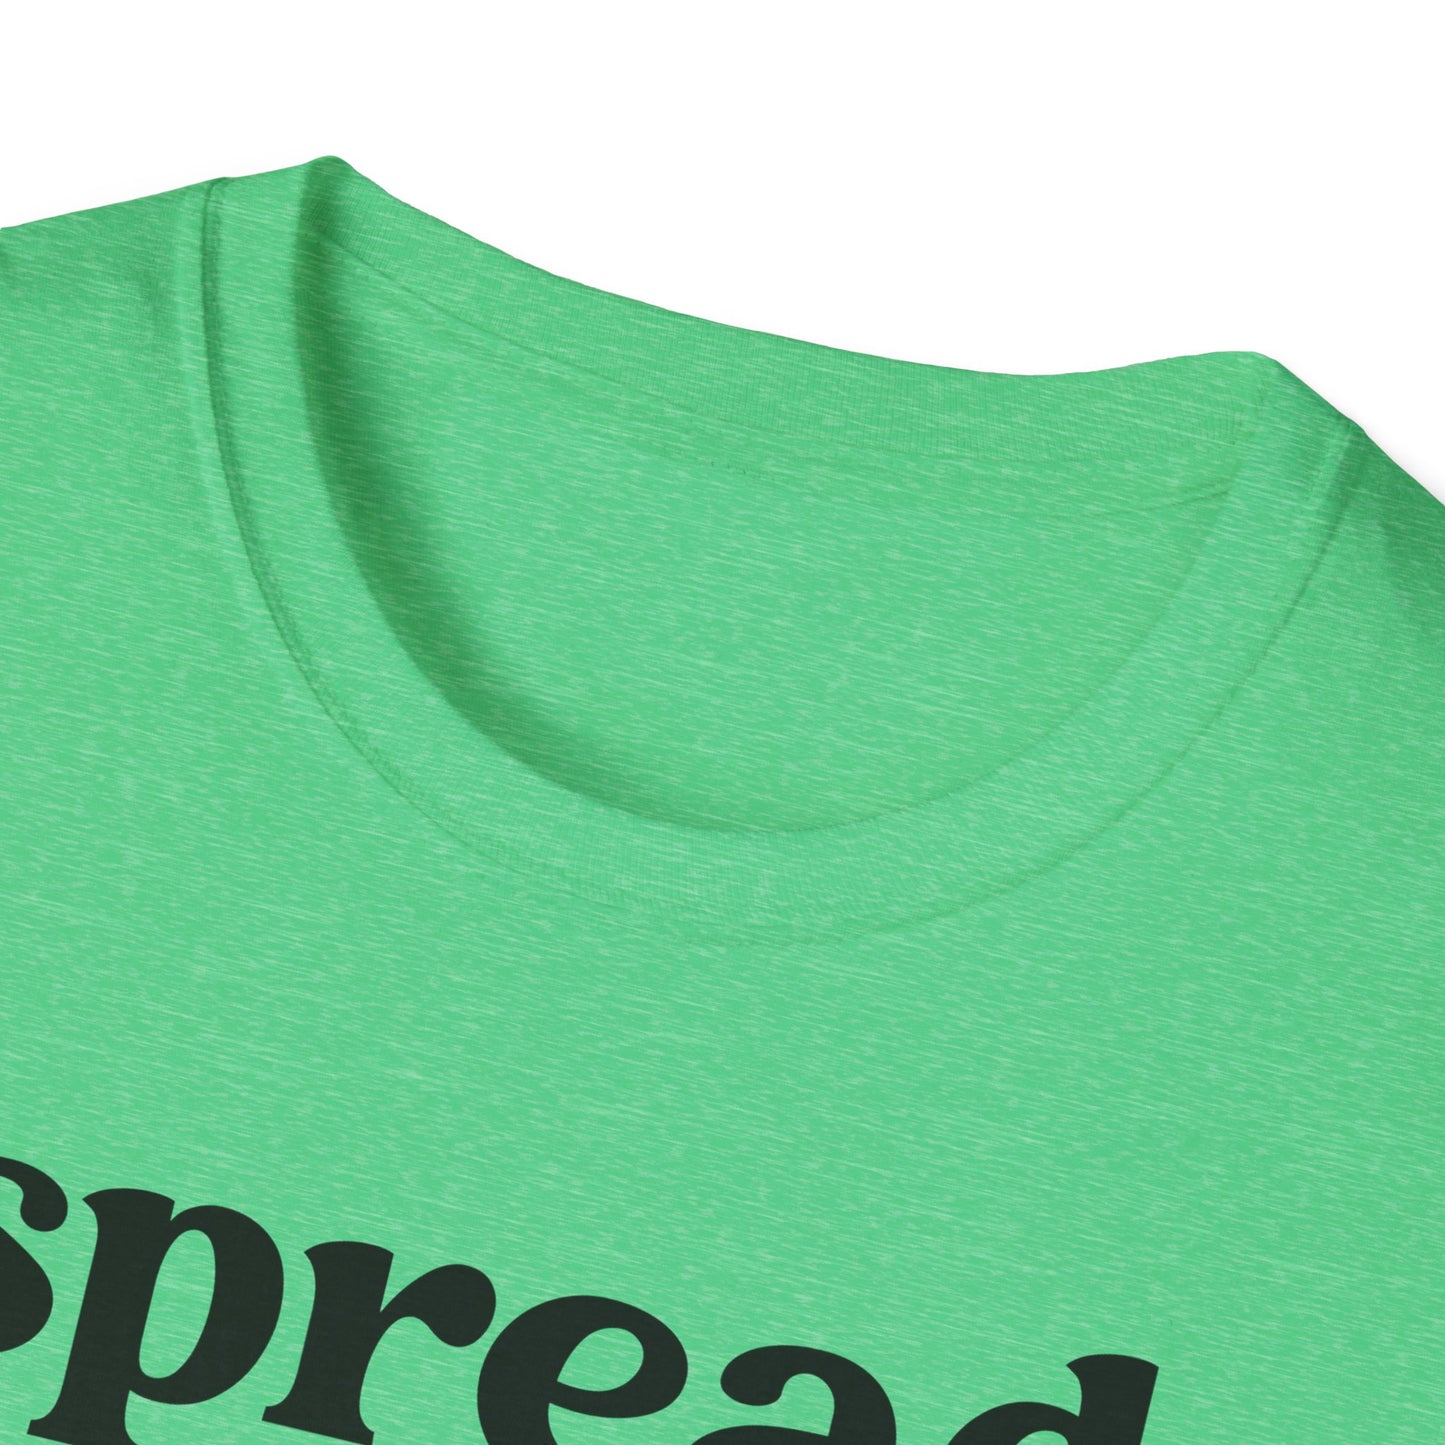 Spread Love like Dog Hair - Unisex Softstyle T-Shirt